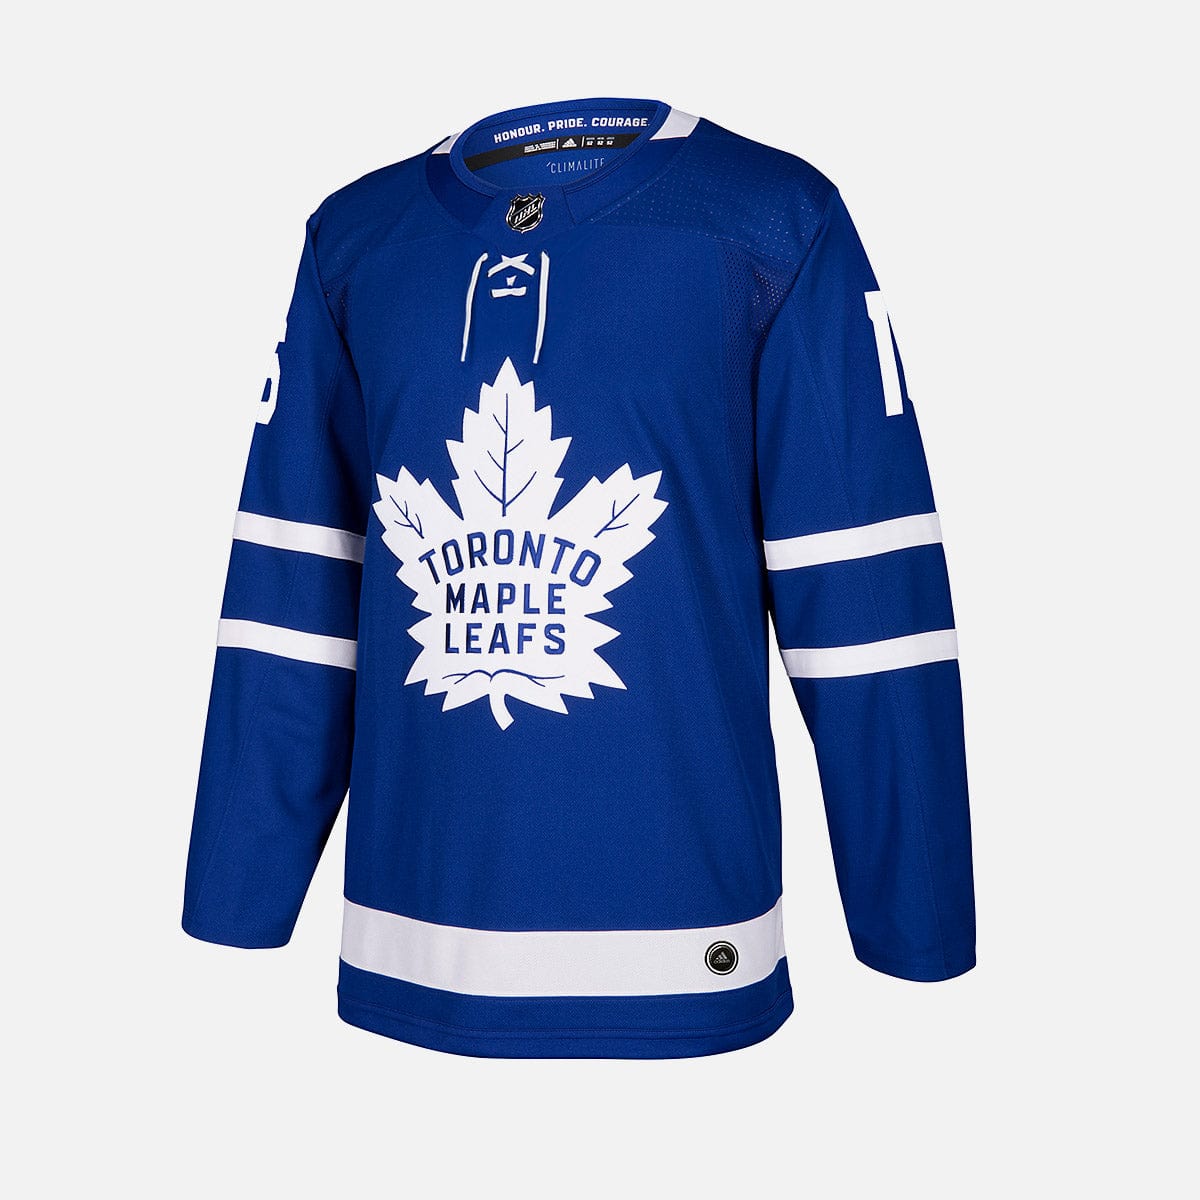 Toronto Maple Leafs Home Adidas Authentic Senior Jersey - Mitch Marner